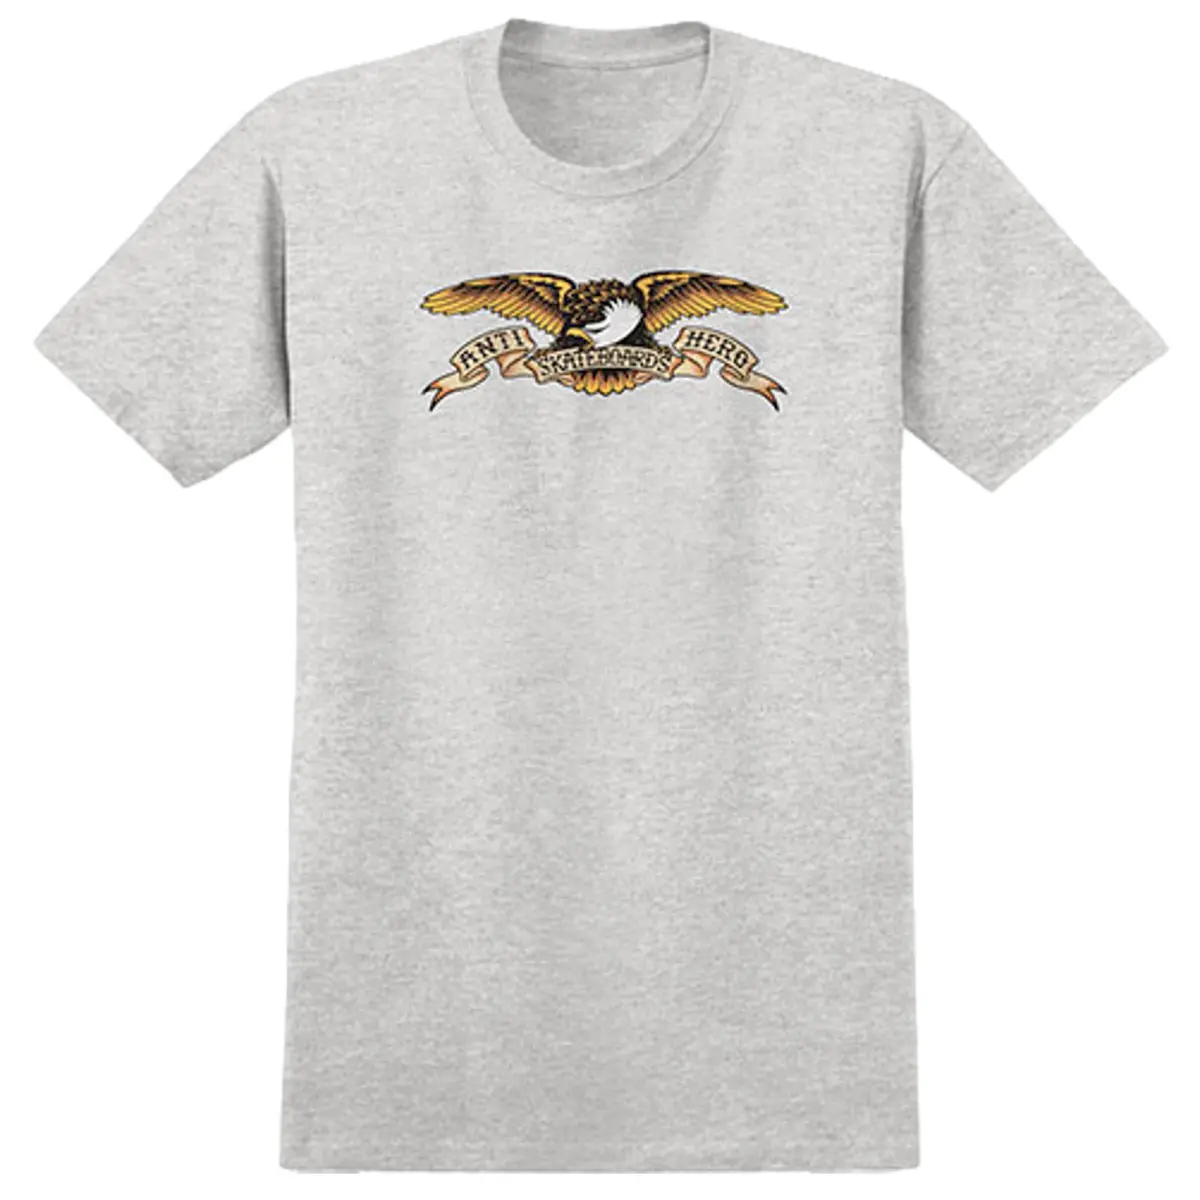 Anti Hero t-shirt eagle sport grey